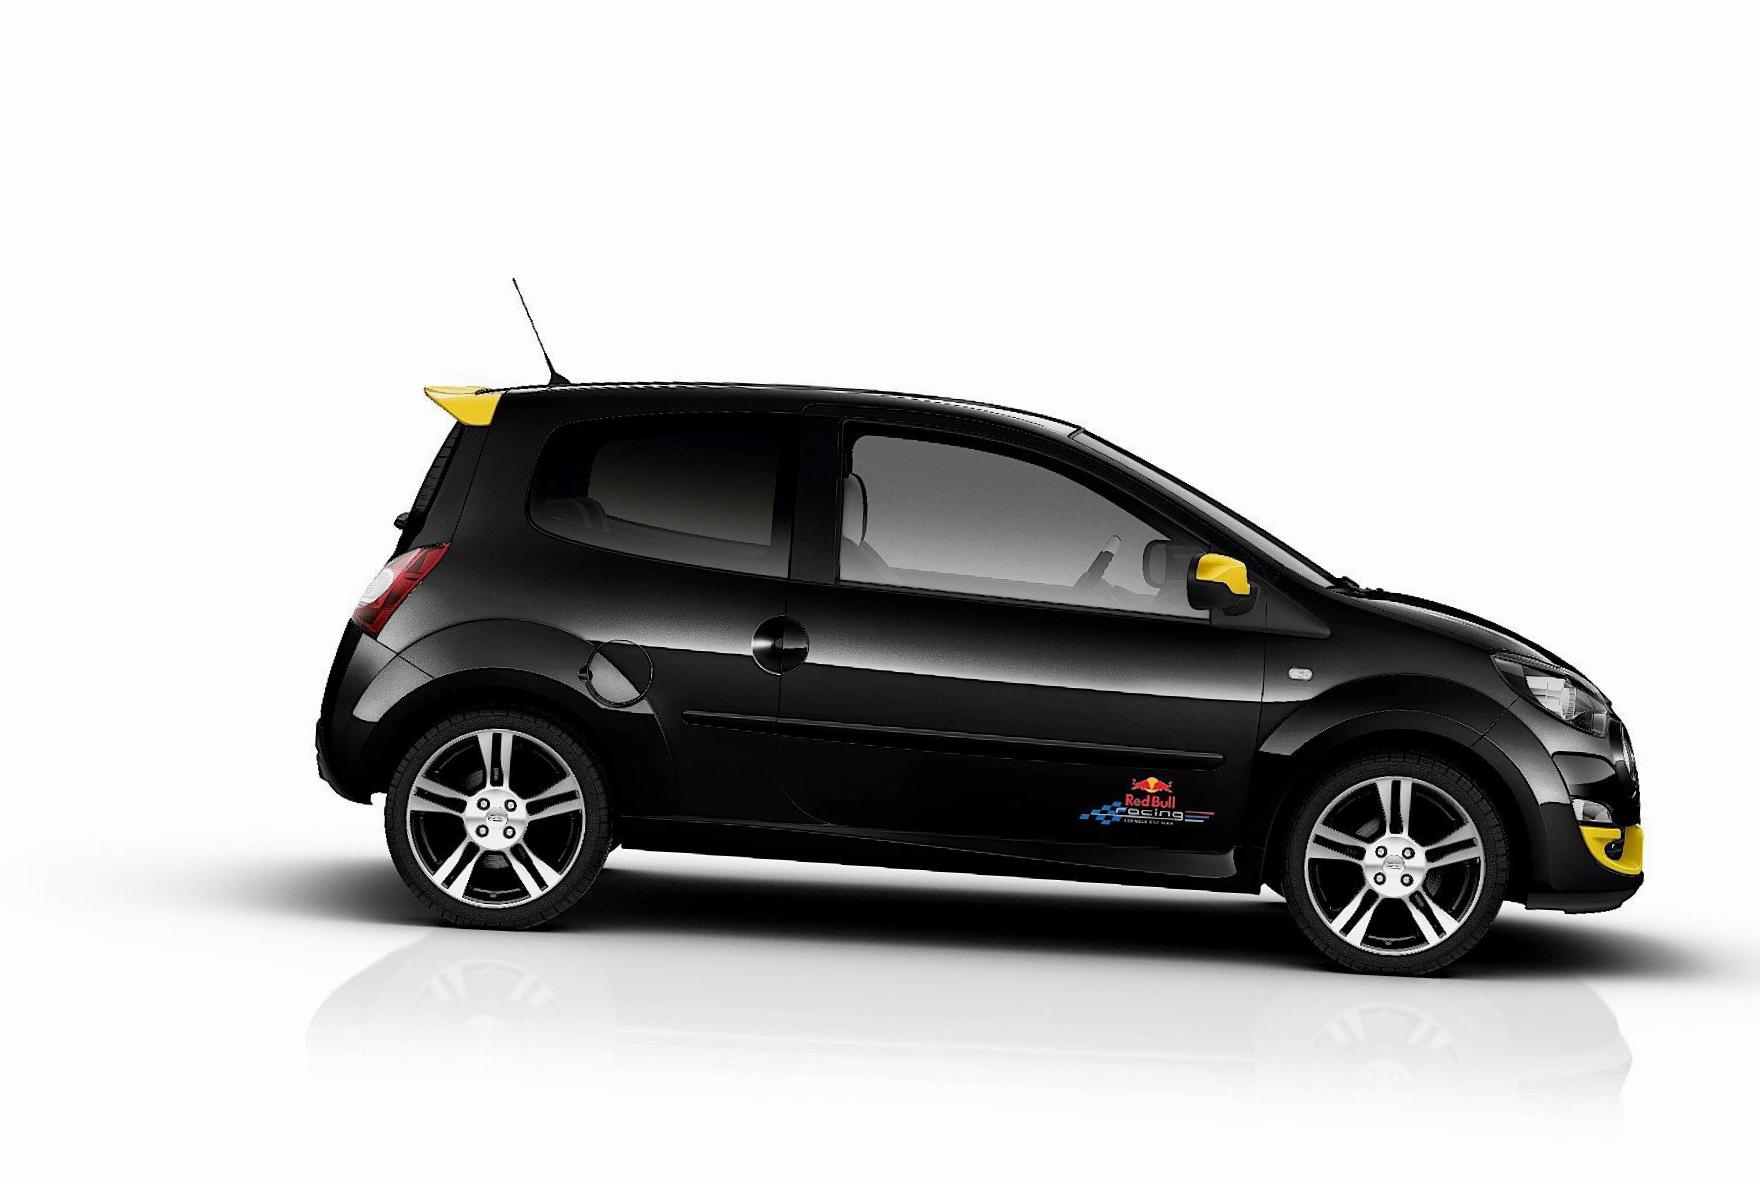 Renault Twingo Characteristics 2010